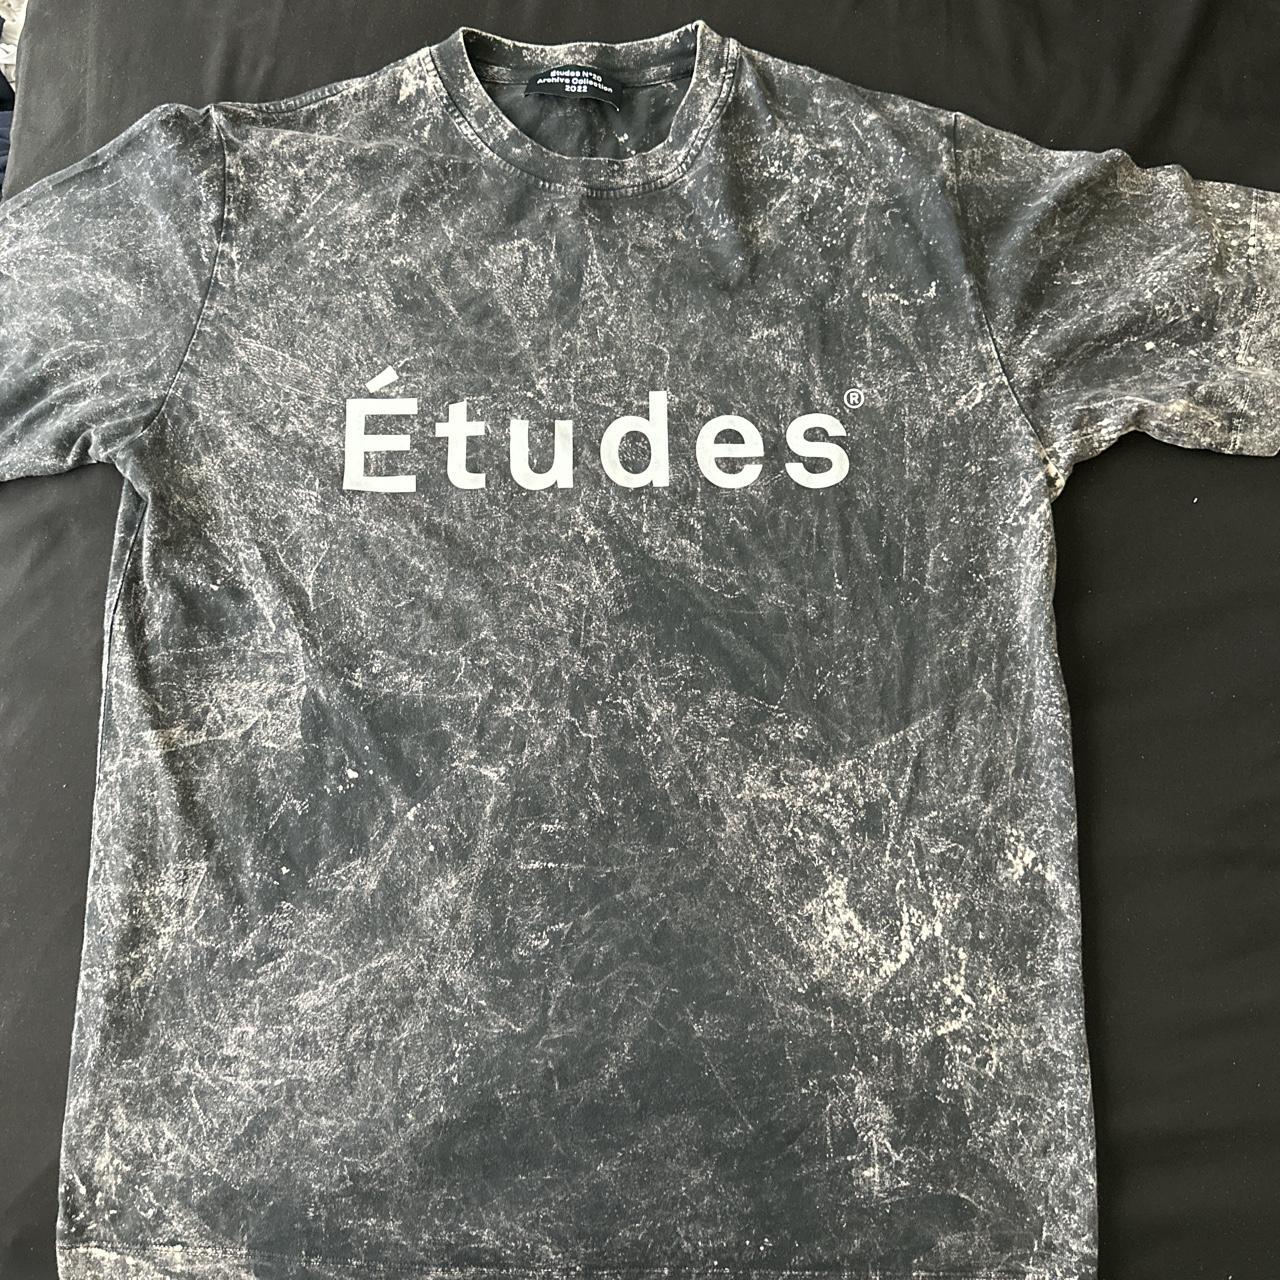 Études Men's Black and White T-shirt